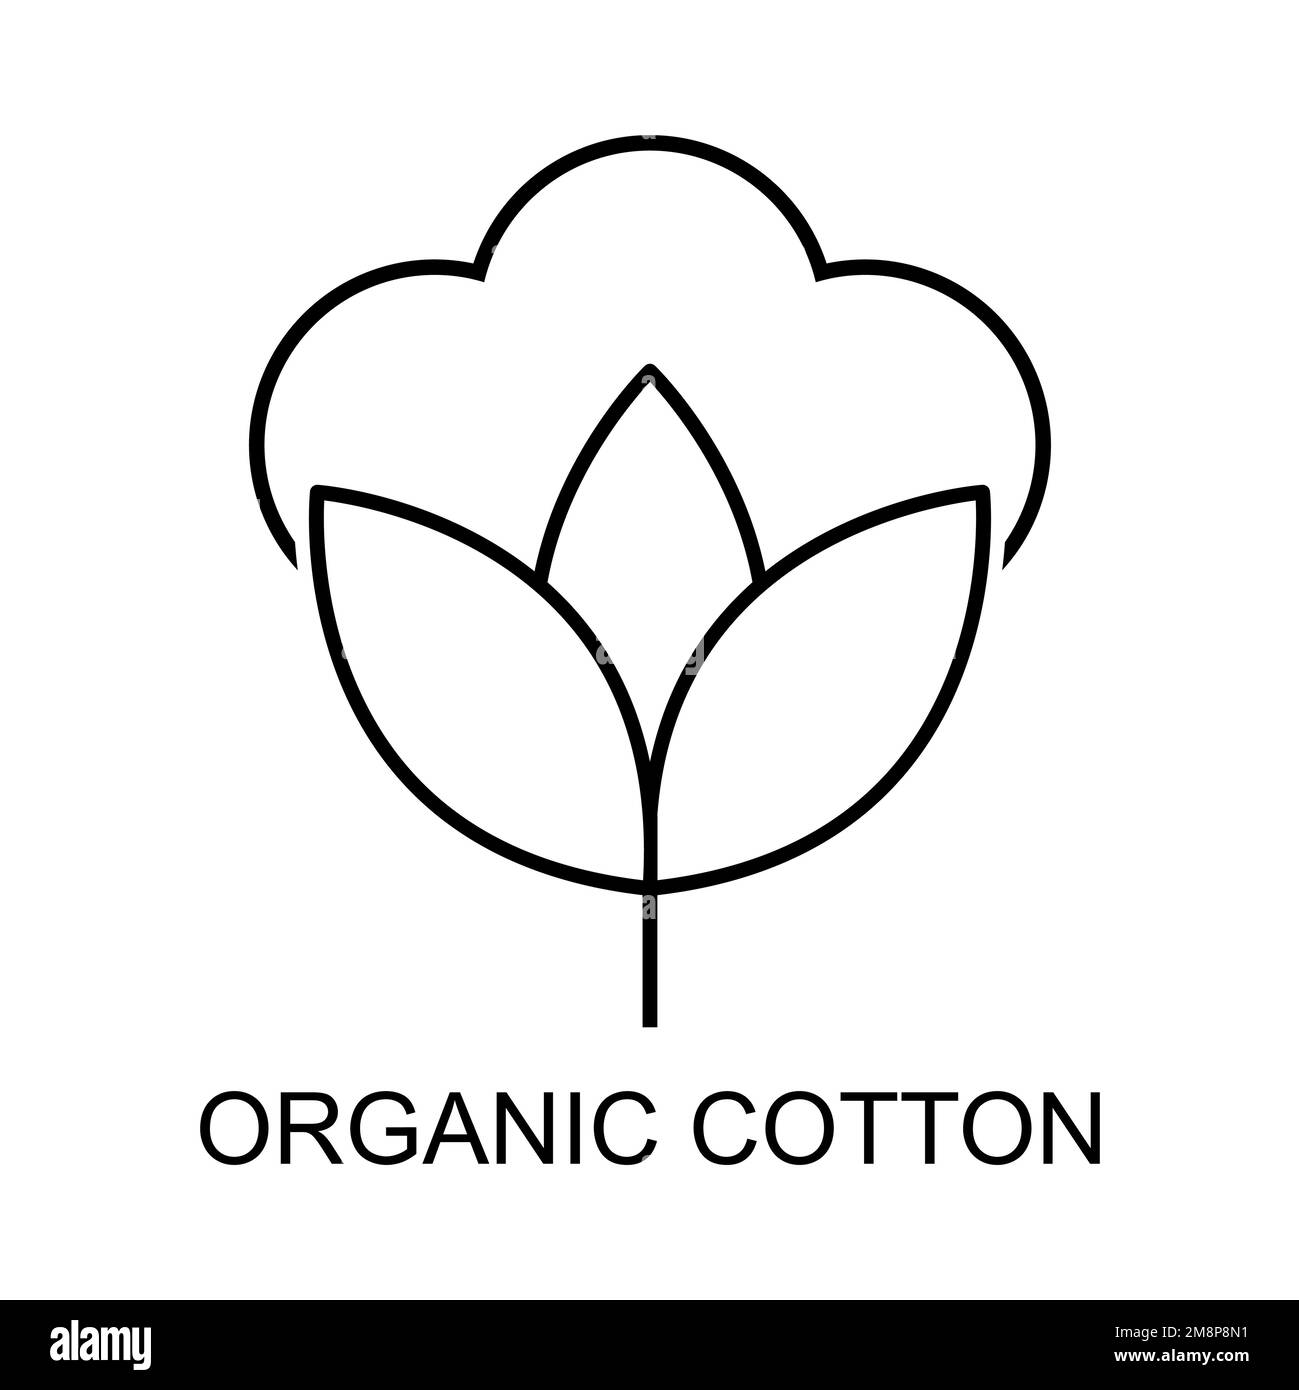 https://c8.alamy.com/comp/2M8P8N1/cotton-organic-icon-clothing-symbol-natural-symbol-web-graphic-vector-illustration-2M8P8N1.jpg